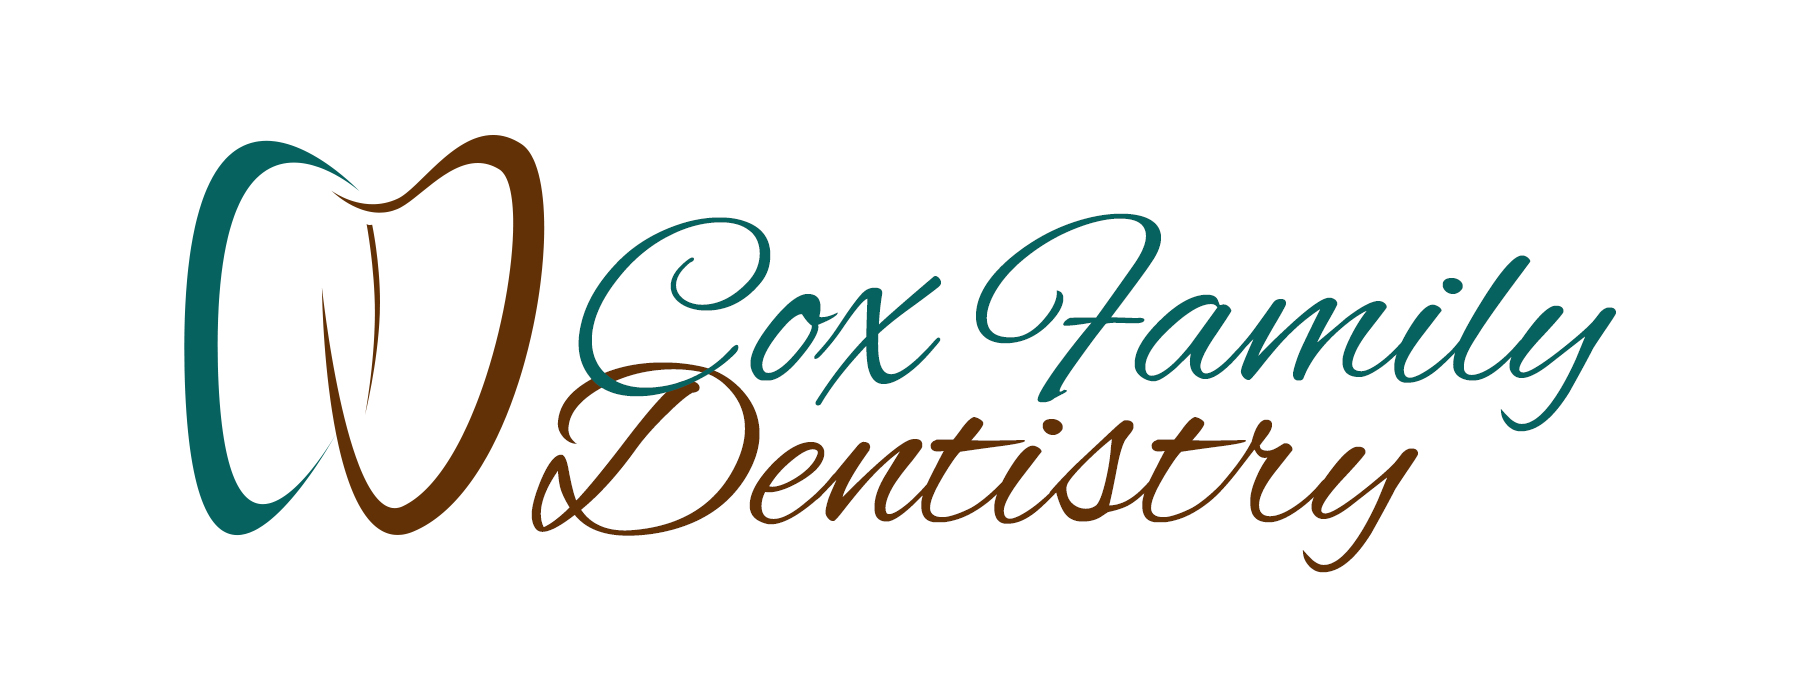 Cox Family Dentistry